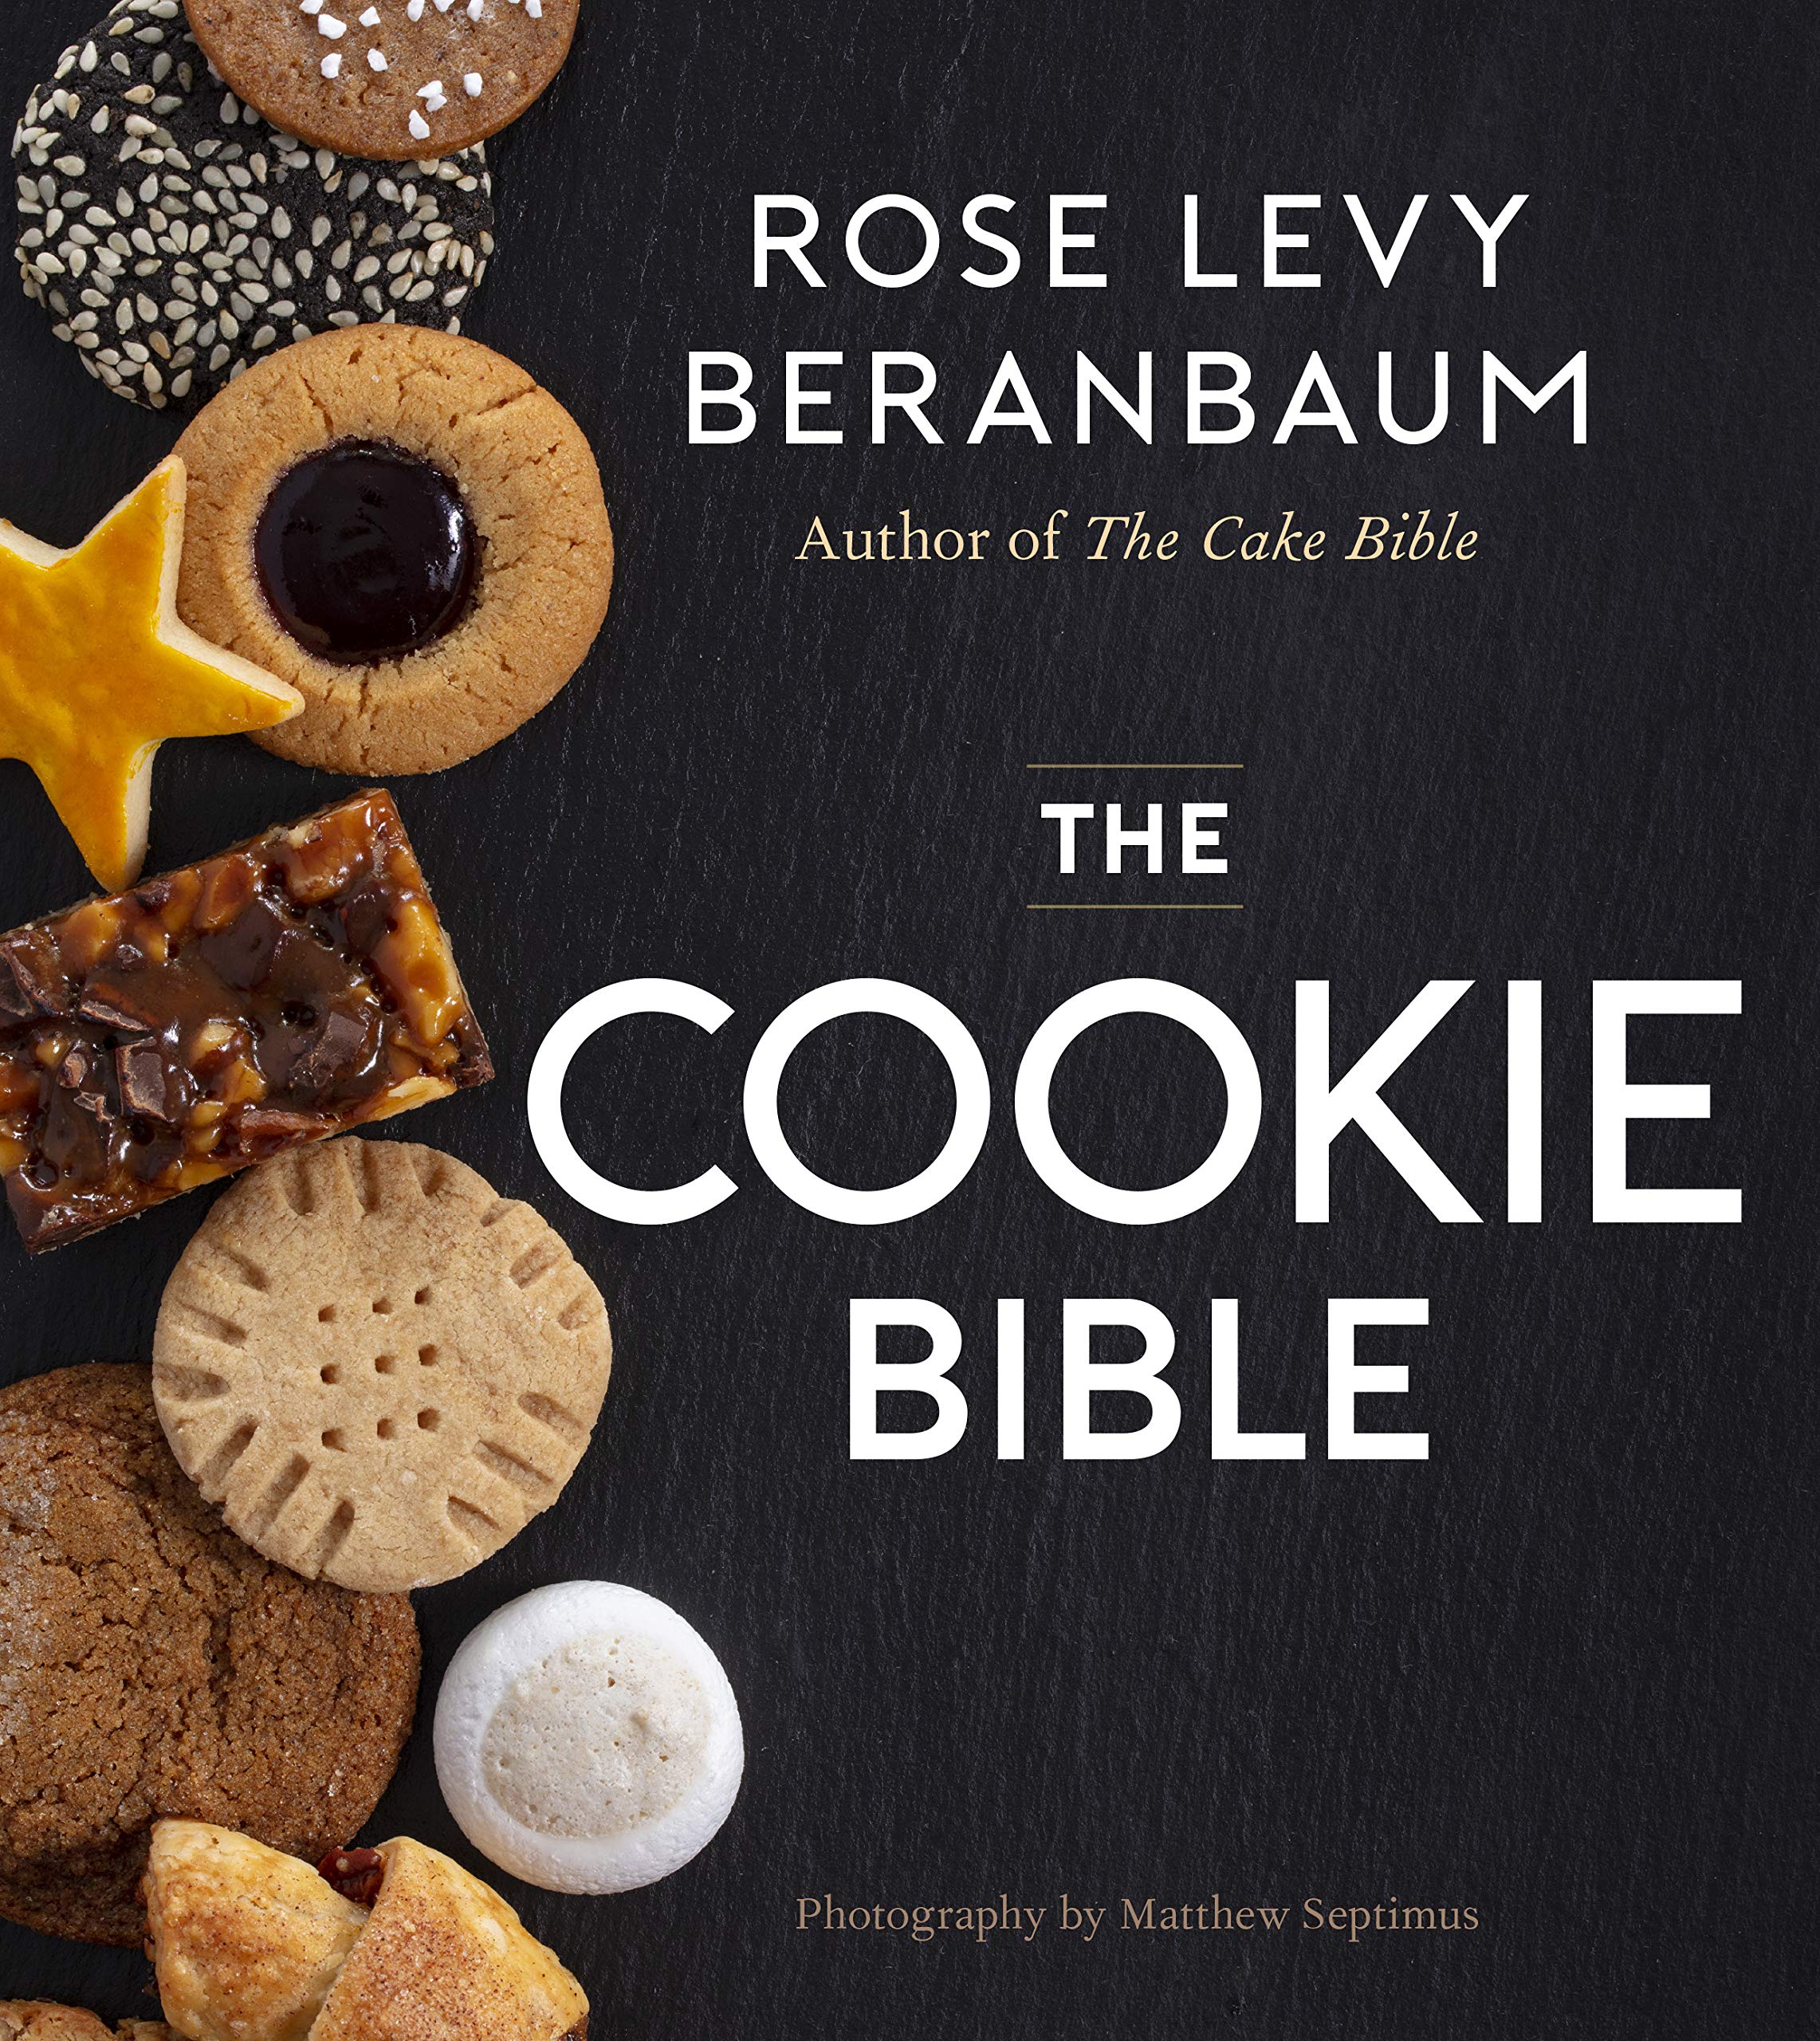 The Cookie Bible (Rose Levy Beranbaum)